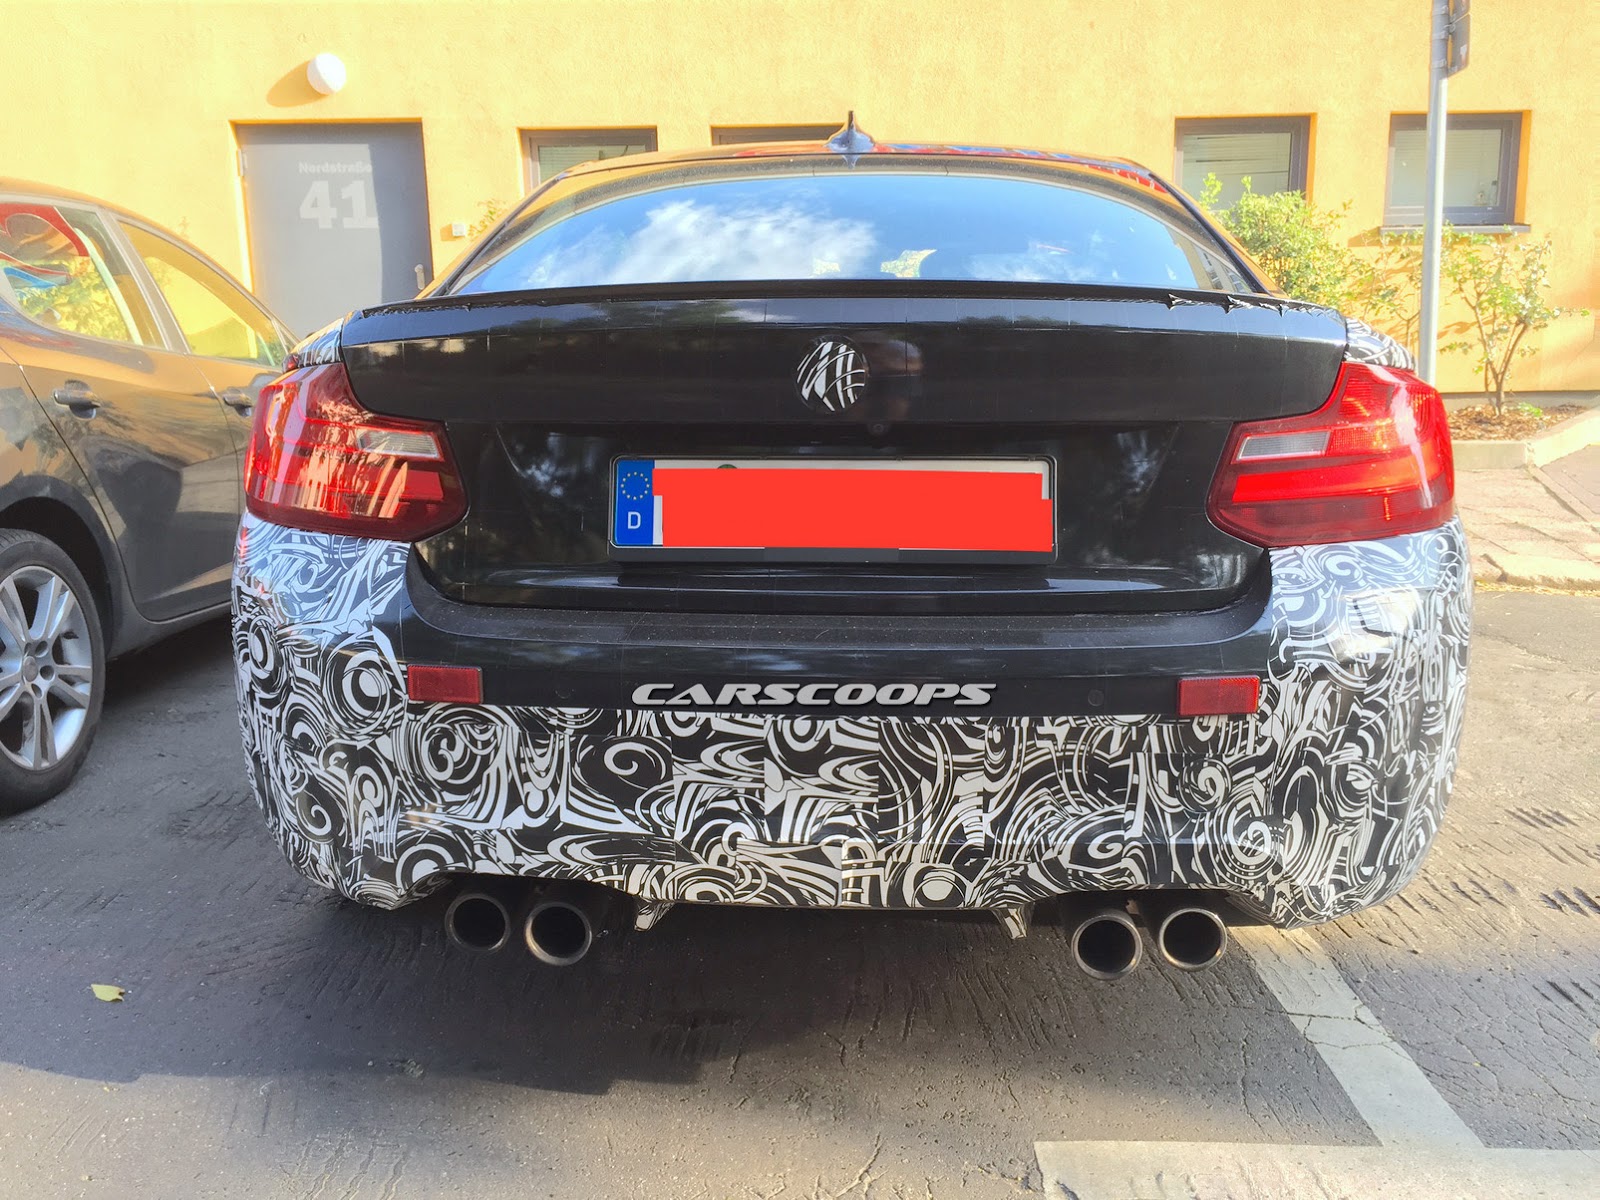 BMW M2 Coupe Spy Shot